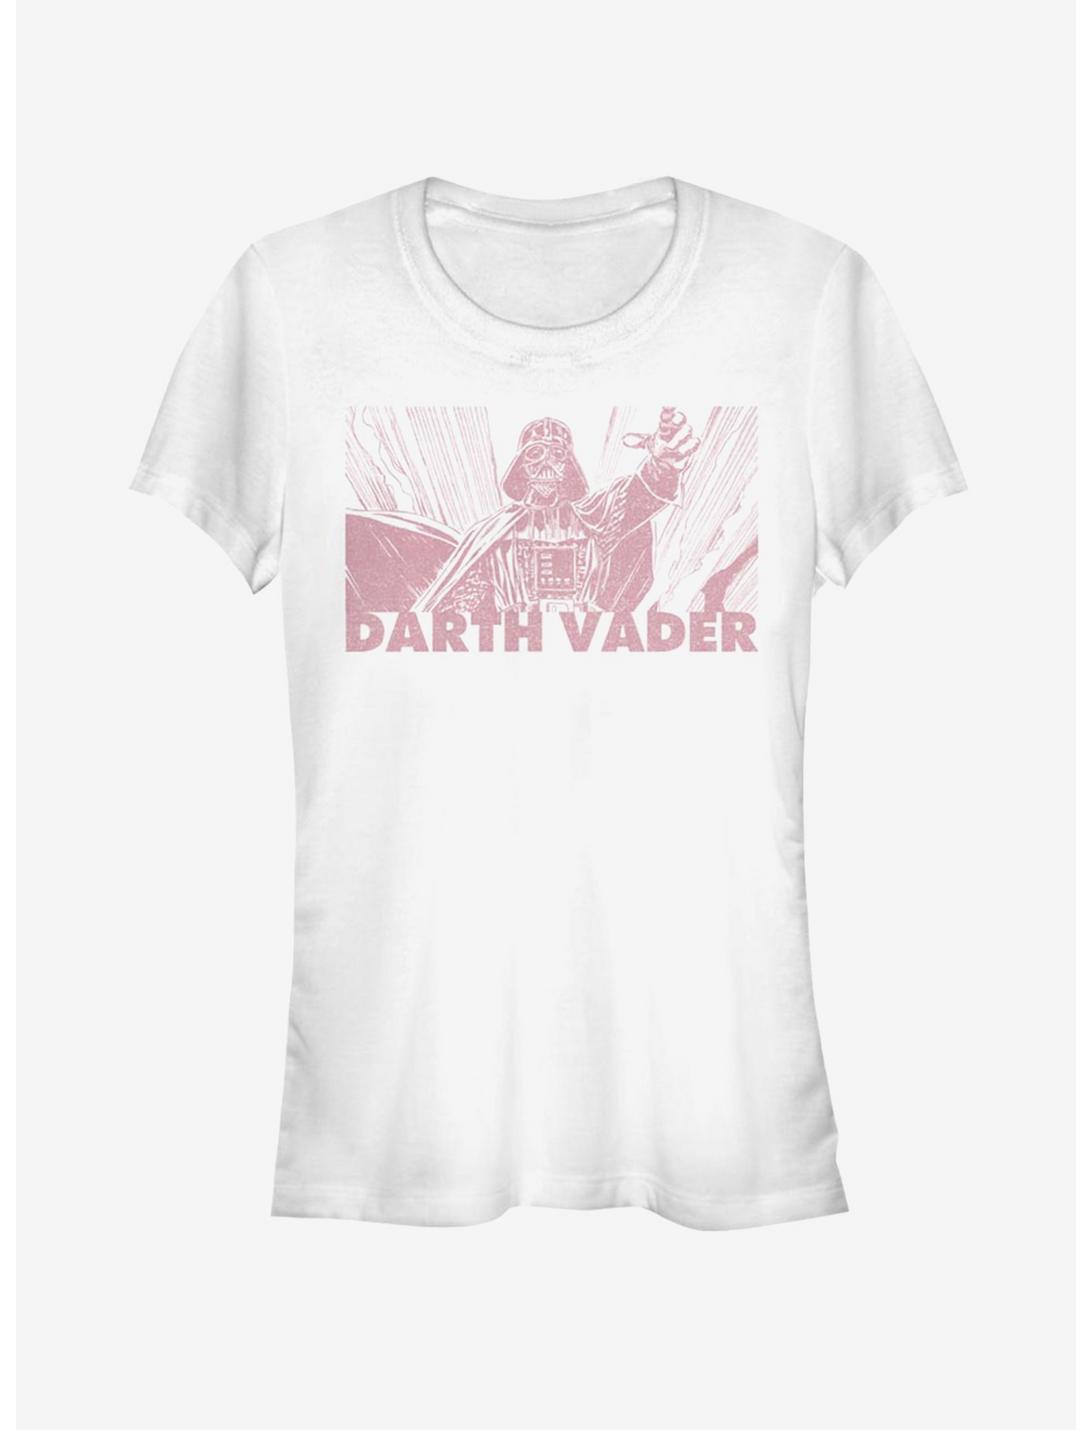 Star Wars Darth Vader One Tone Girls T-Shirt, WHITE, hi-res